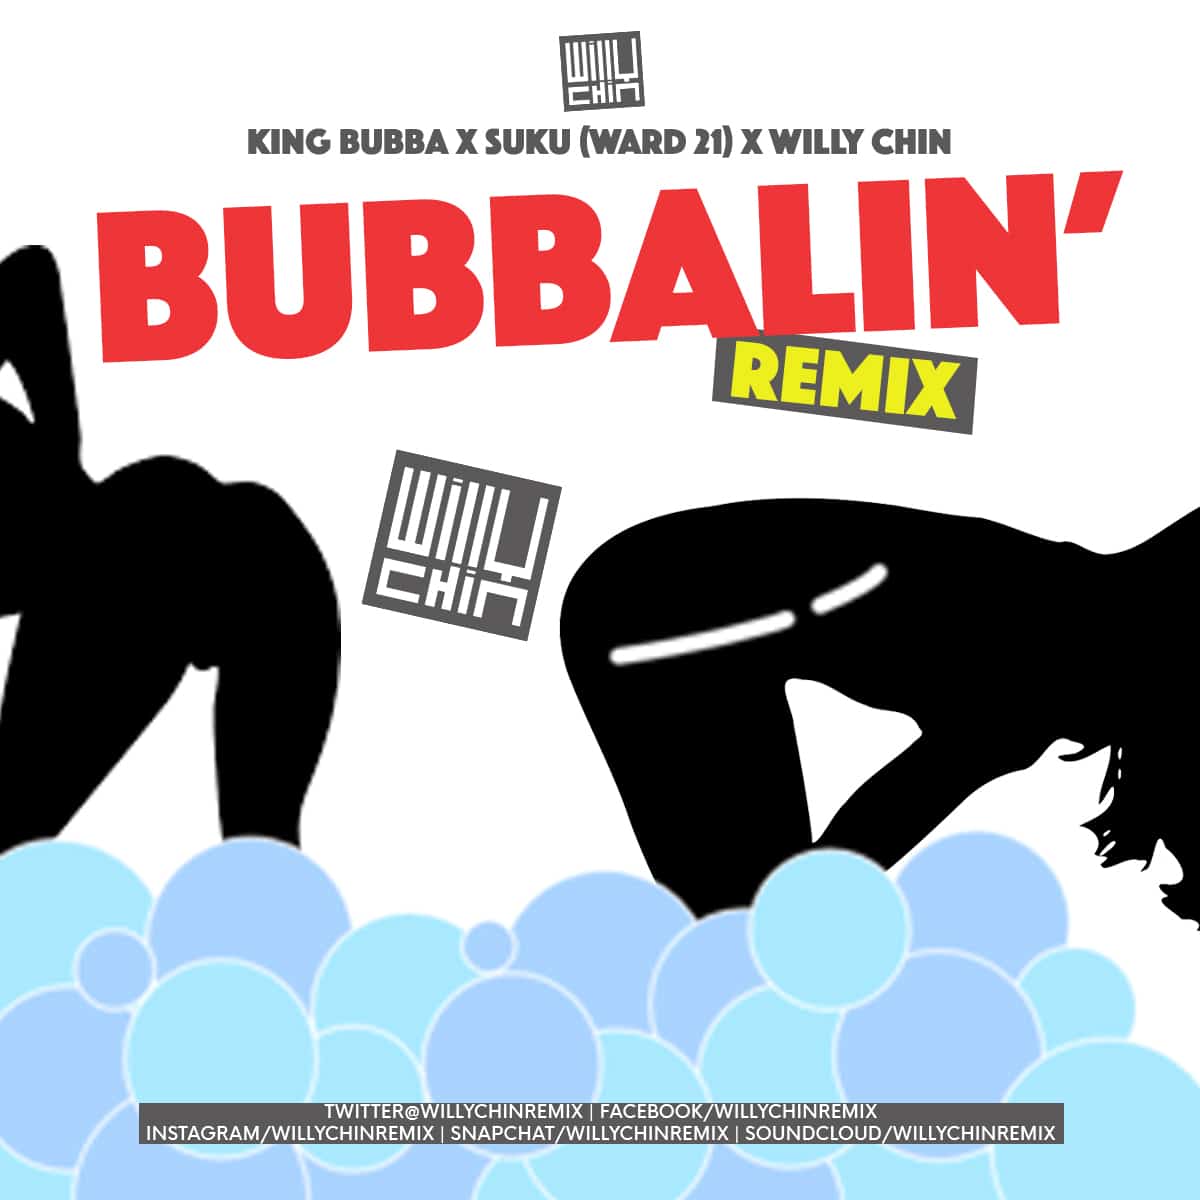 King Bubba - Bubbaling (Willy Chin Remix) ft. Suku (Ward 21)